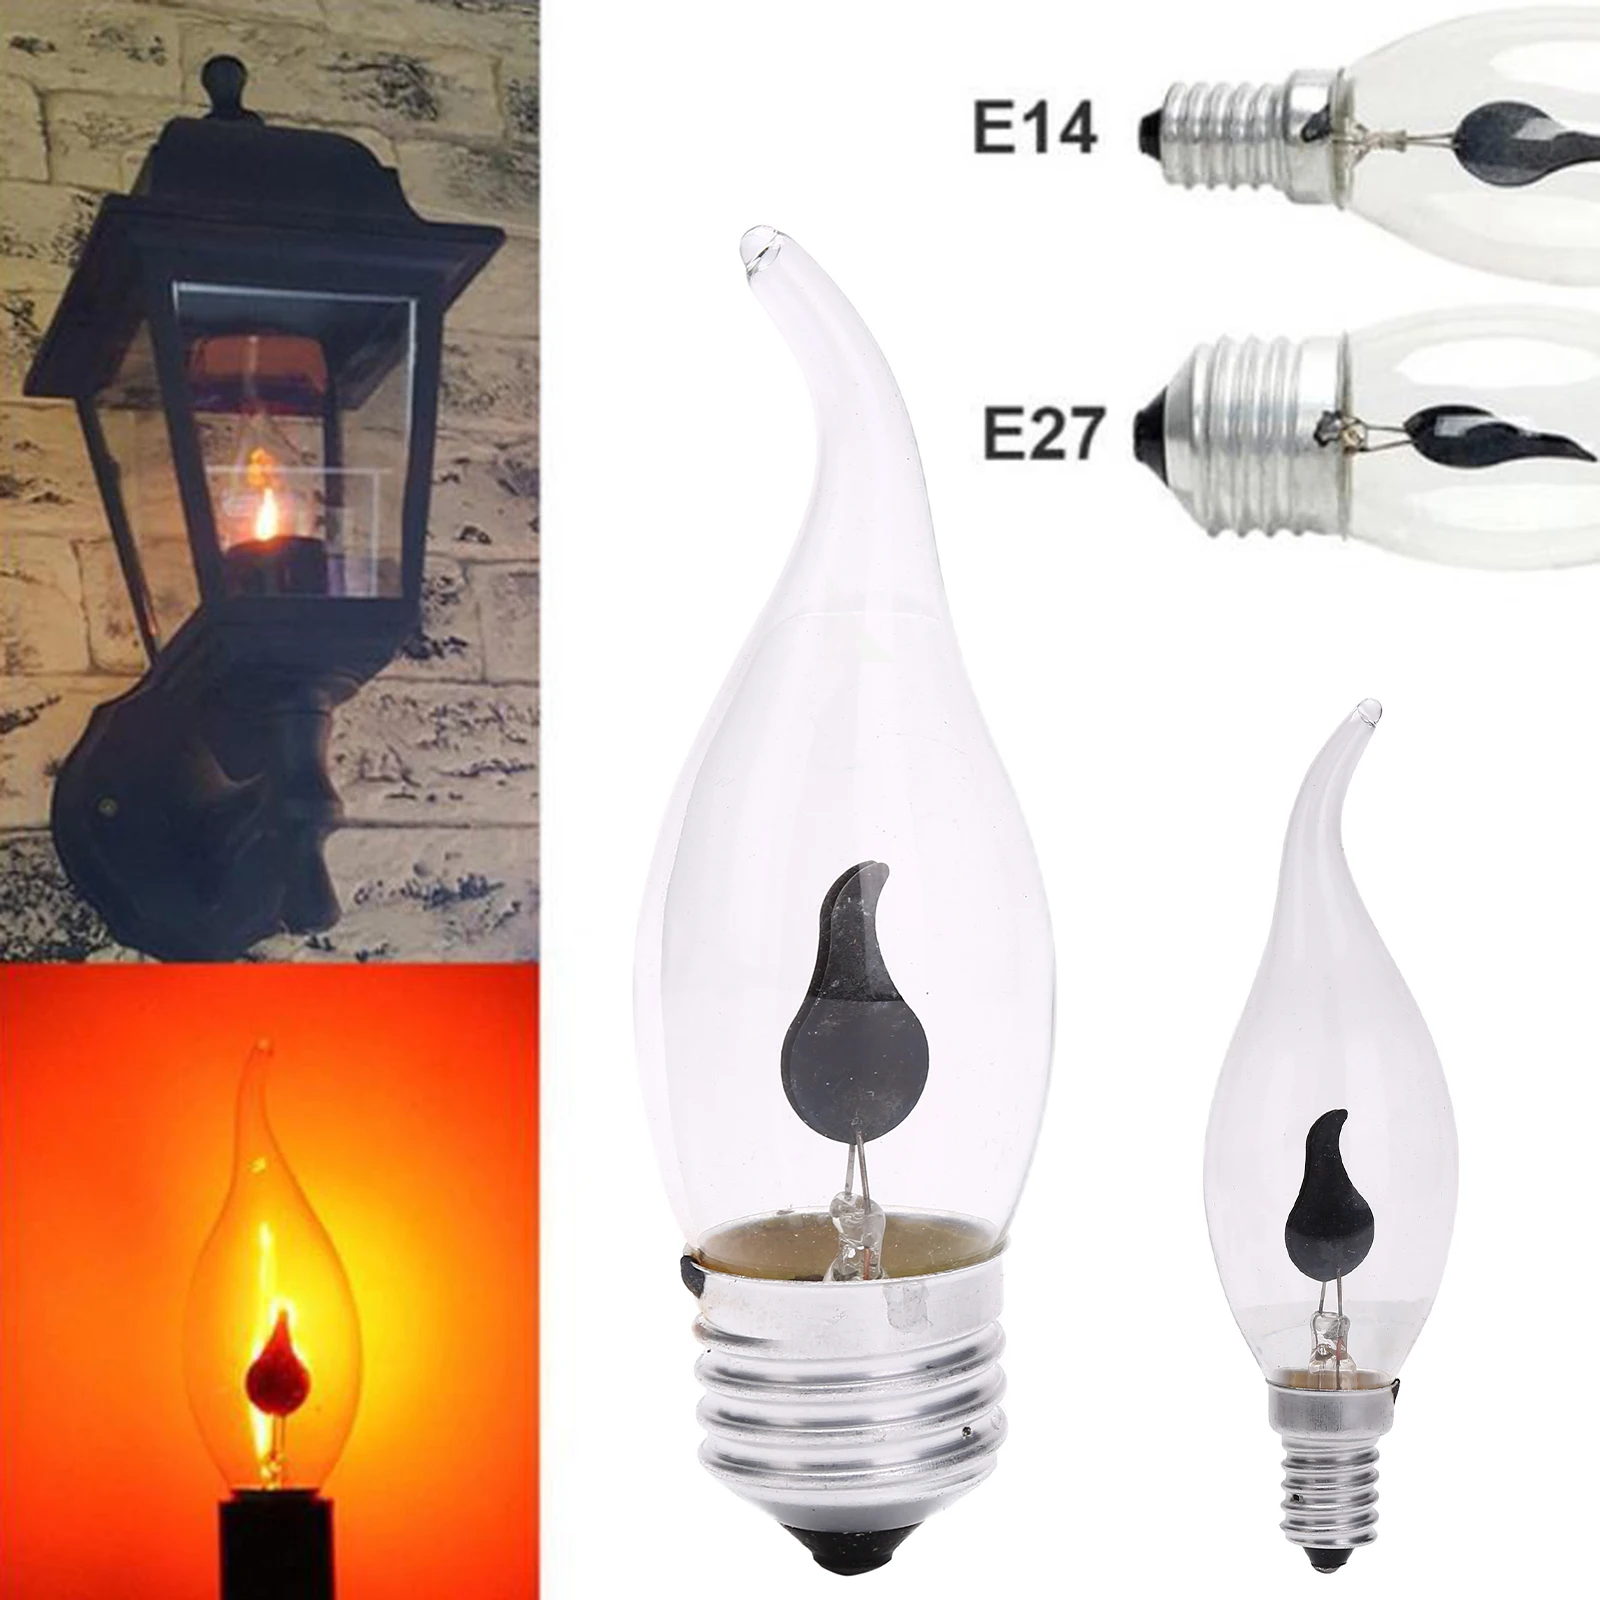 E14/E27 3W Flame Fire Light Bulb Lighting Vintage Flickering Effect Tungsten Novel Candle Tip Lamp Vintage Decor Light Bulb